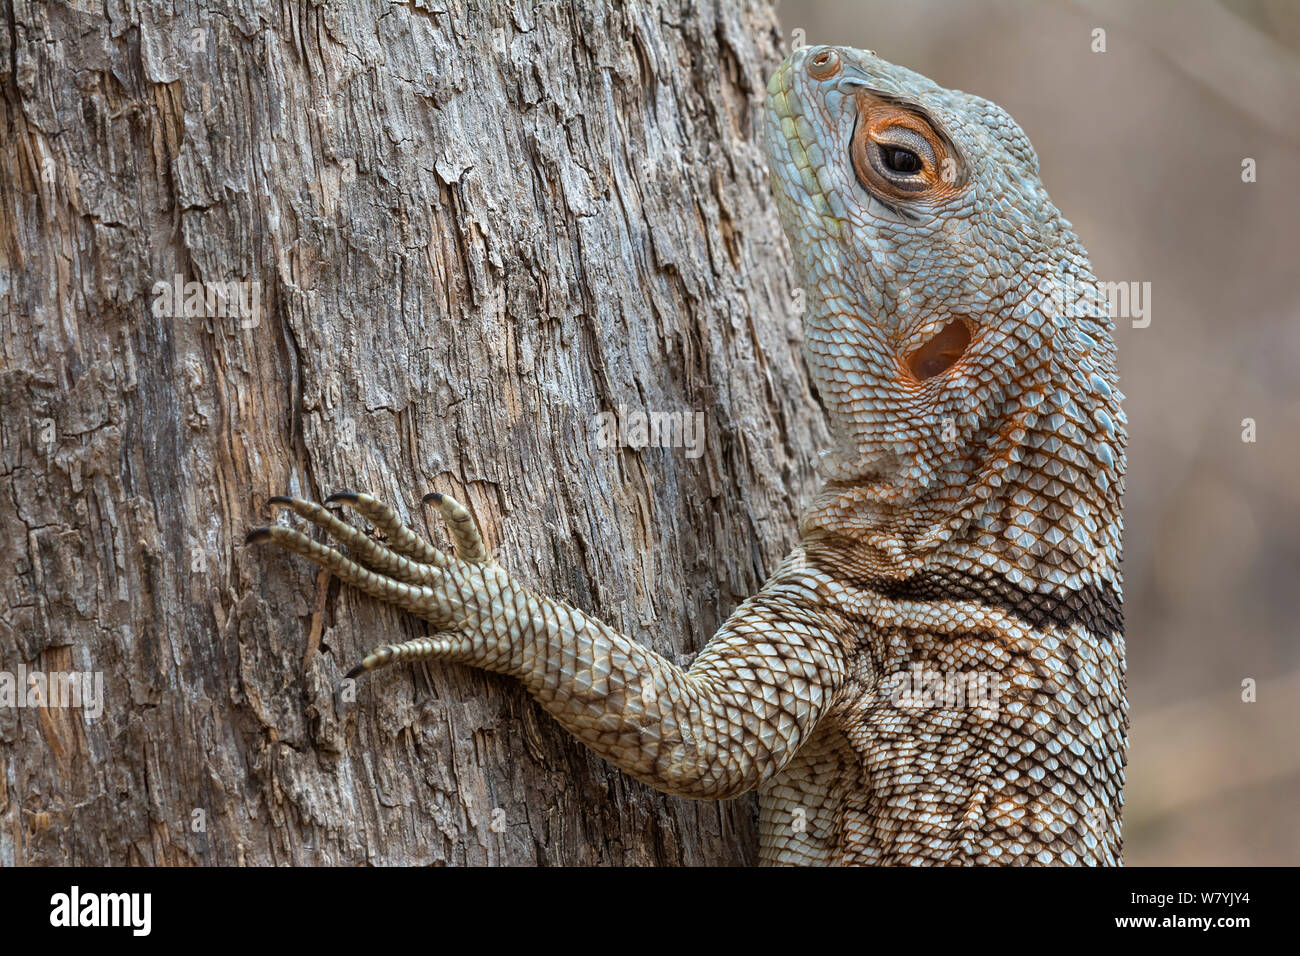 Madagascar iguana immagini e fotografie stock ad alta risoluzione - Alamy